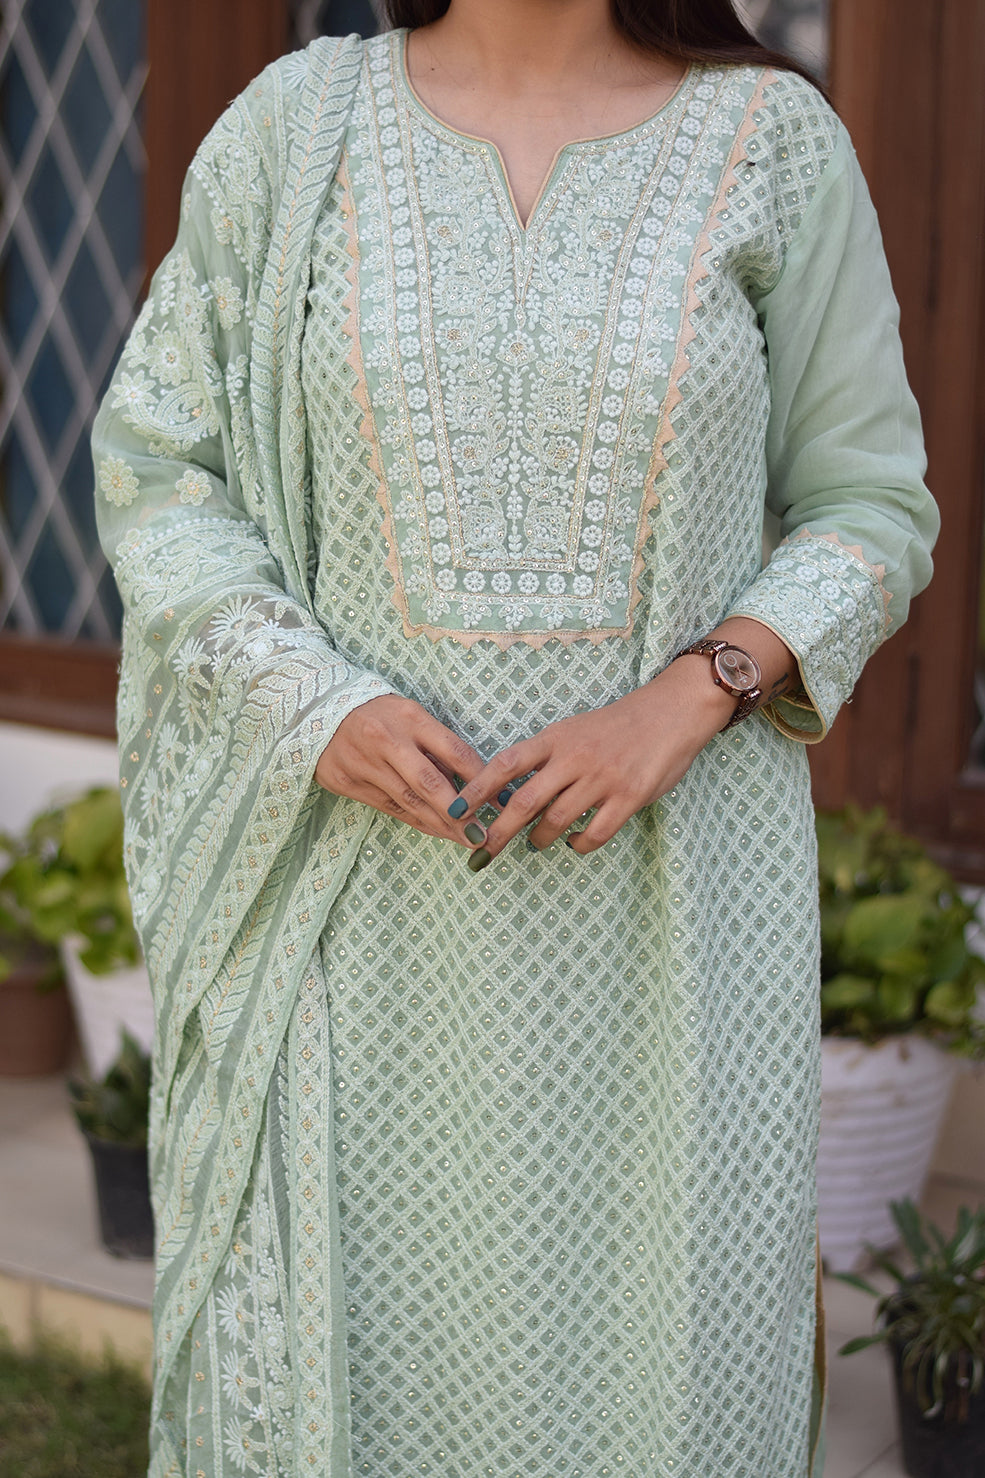 A stunning Indian woman showcasing a green chikankari kurta set with intricate embroidery.